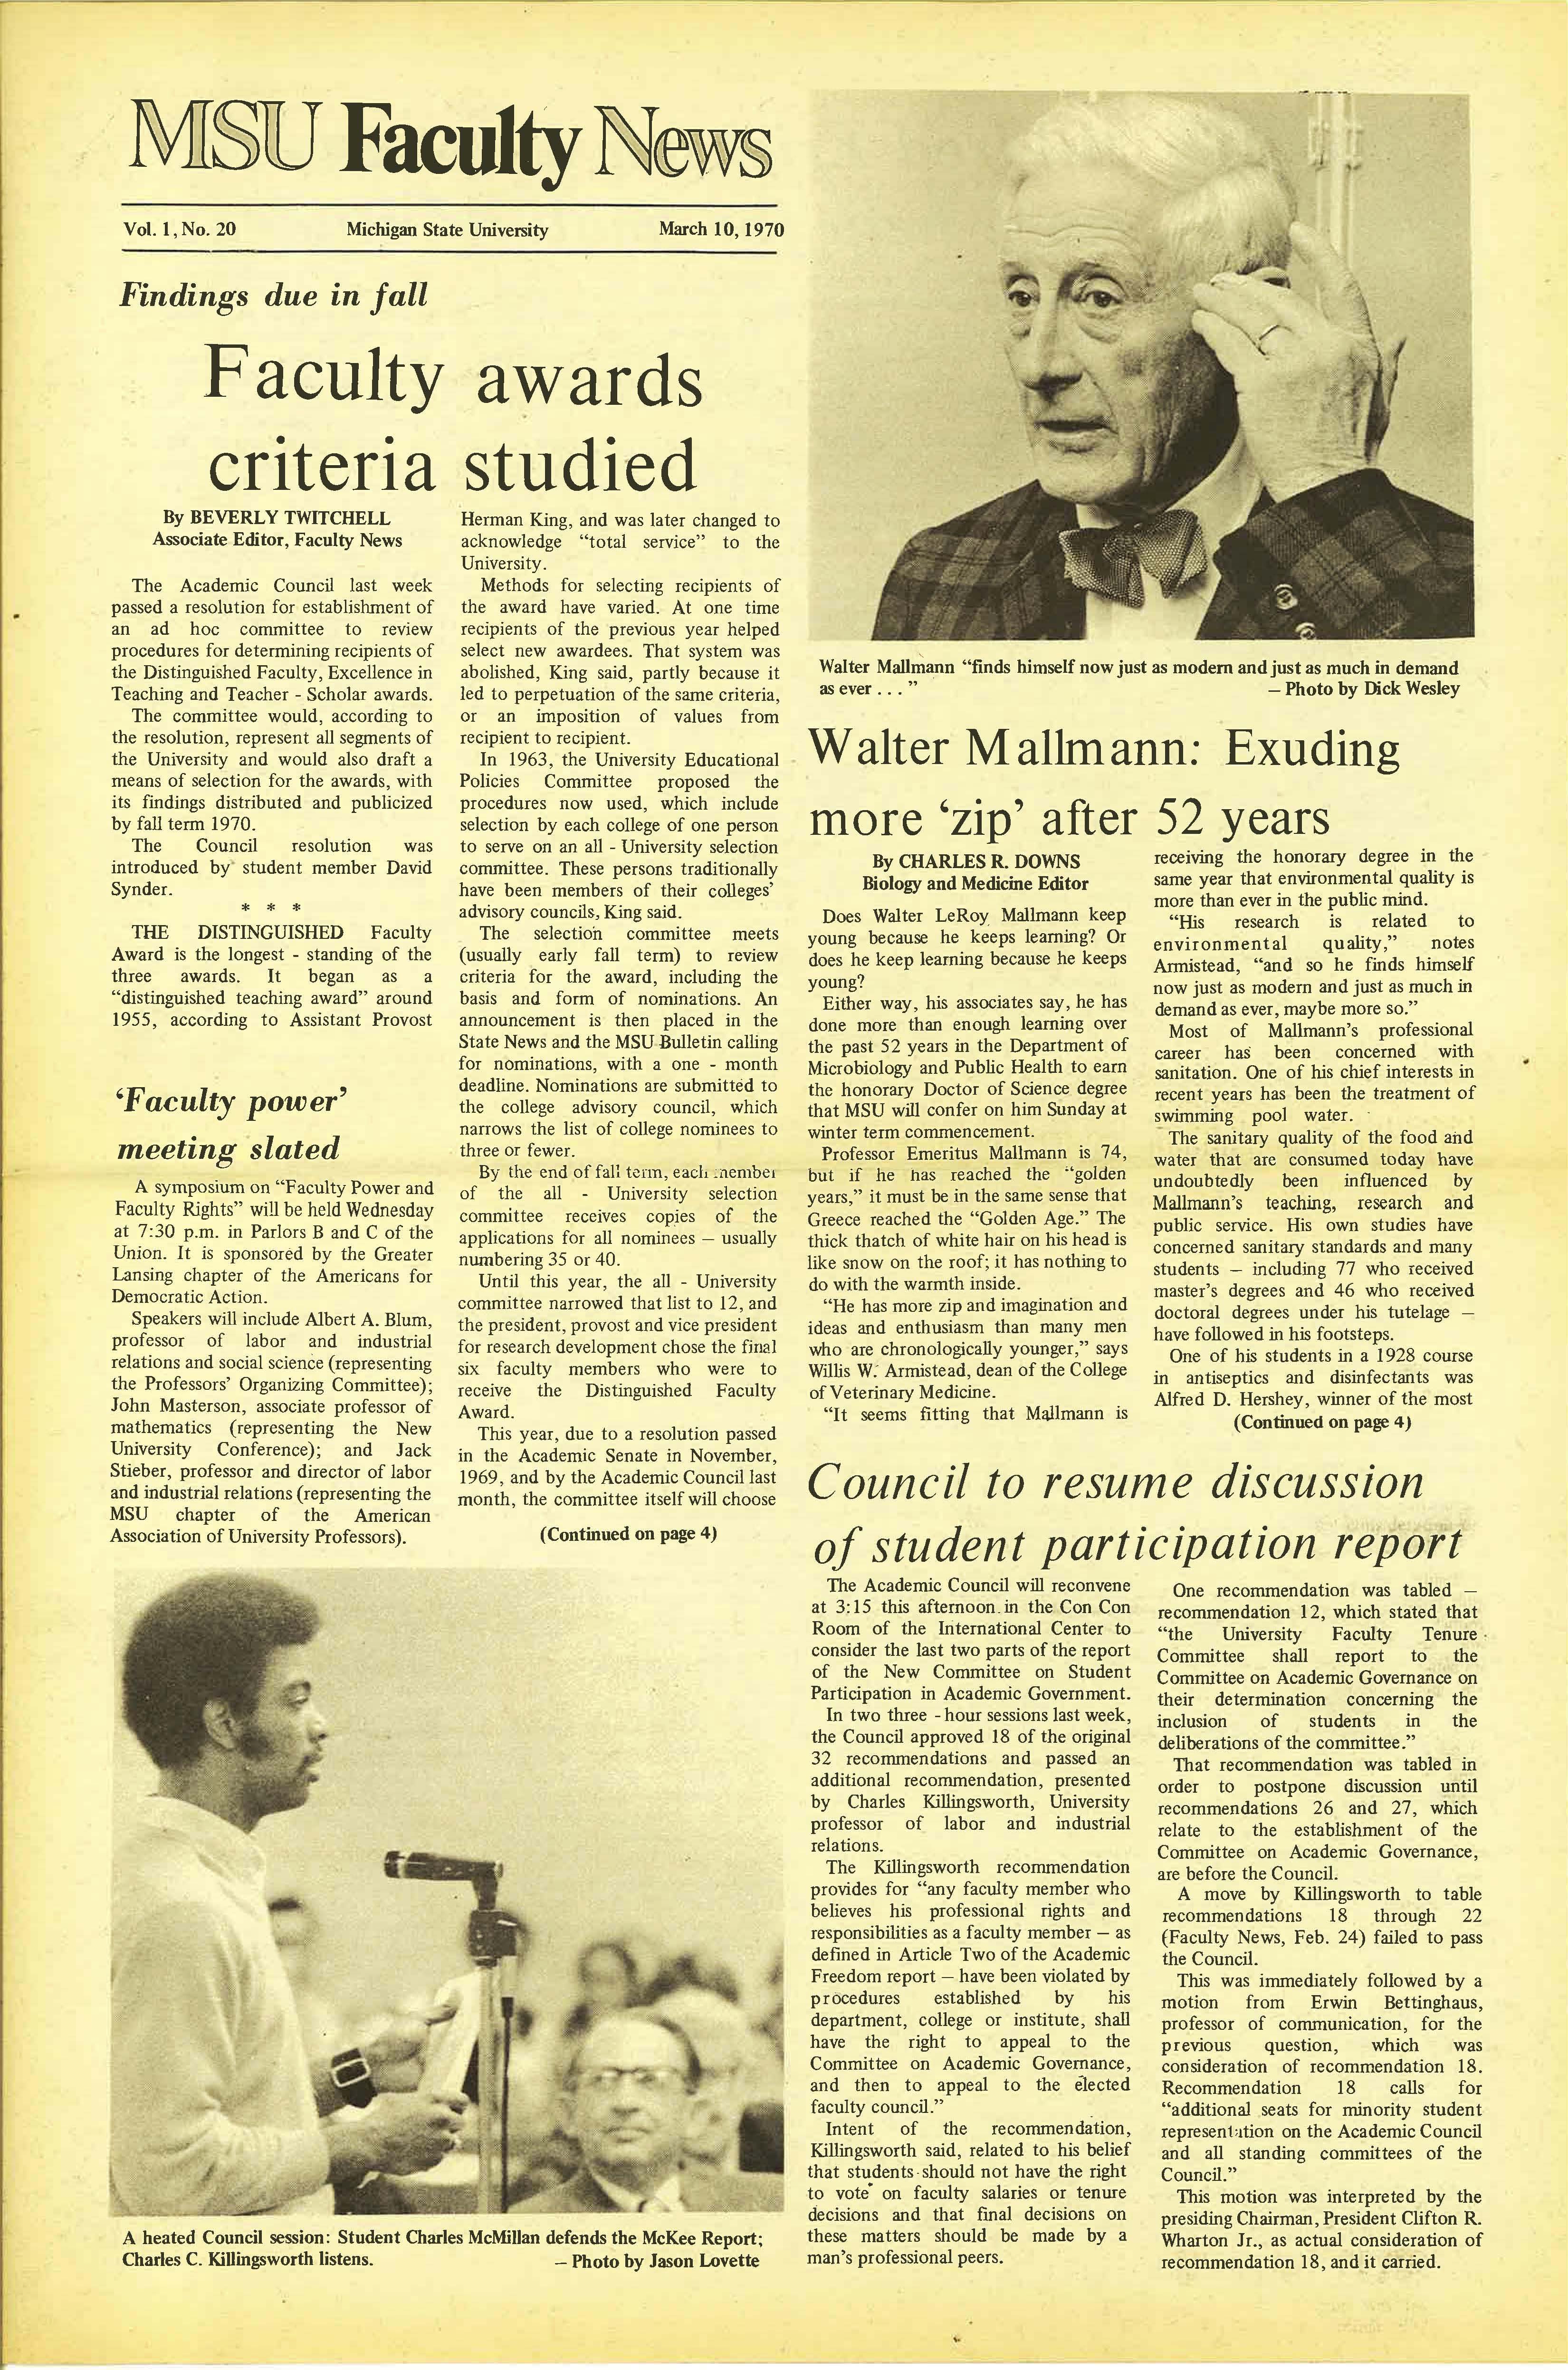 MSU News Bulletin, Vol. 1, No. 16, February 10, 1970